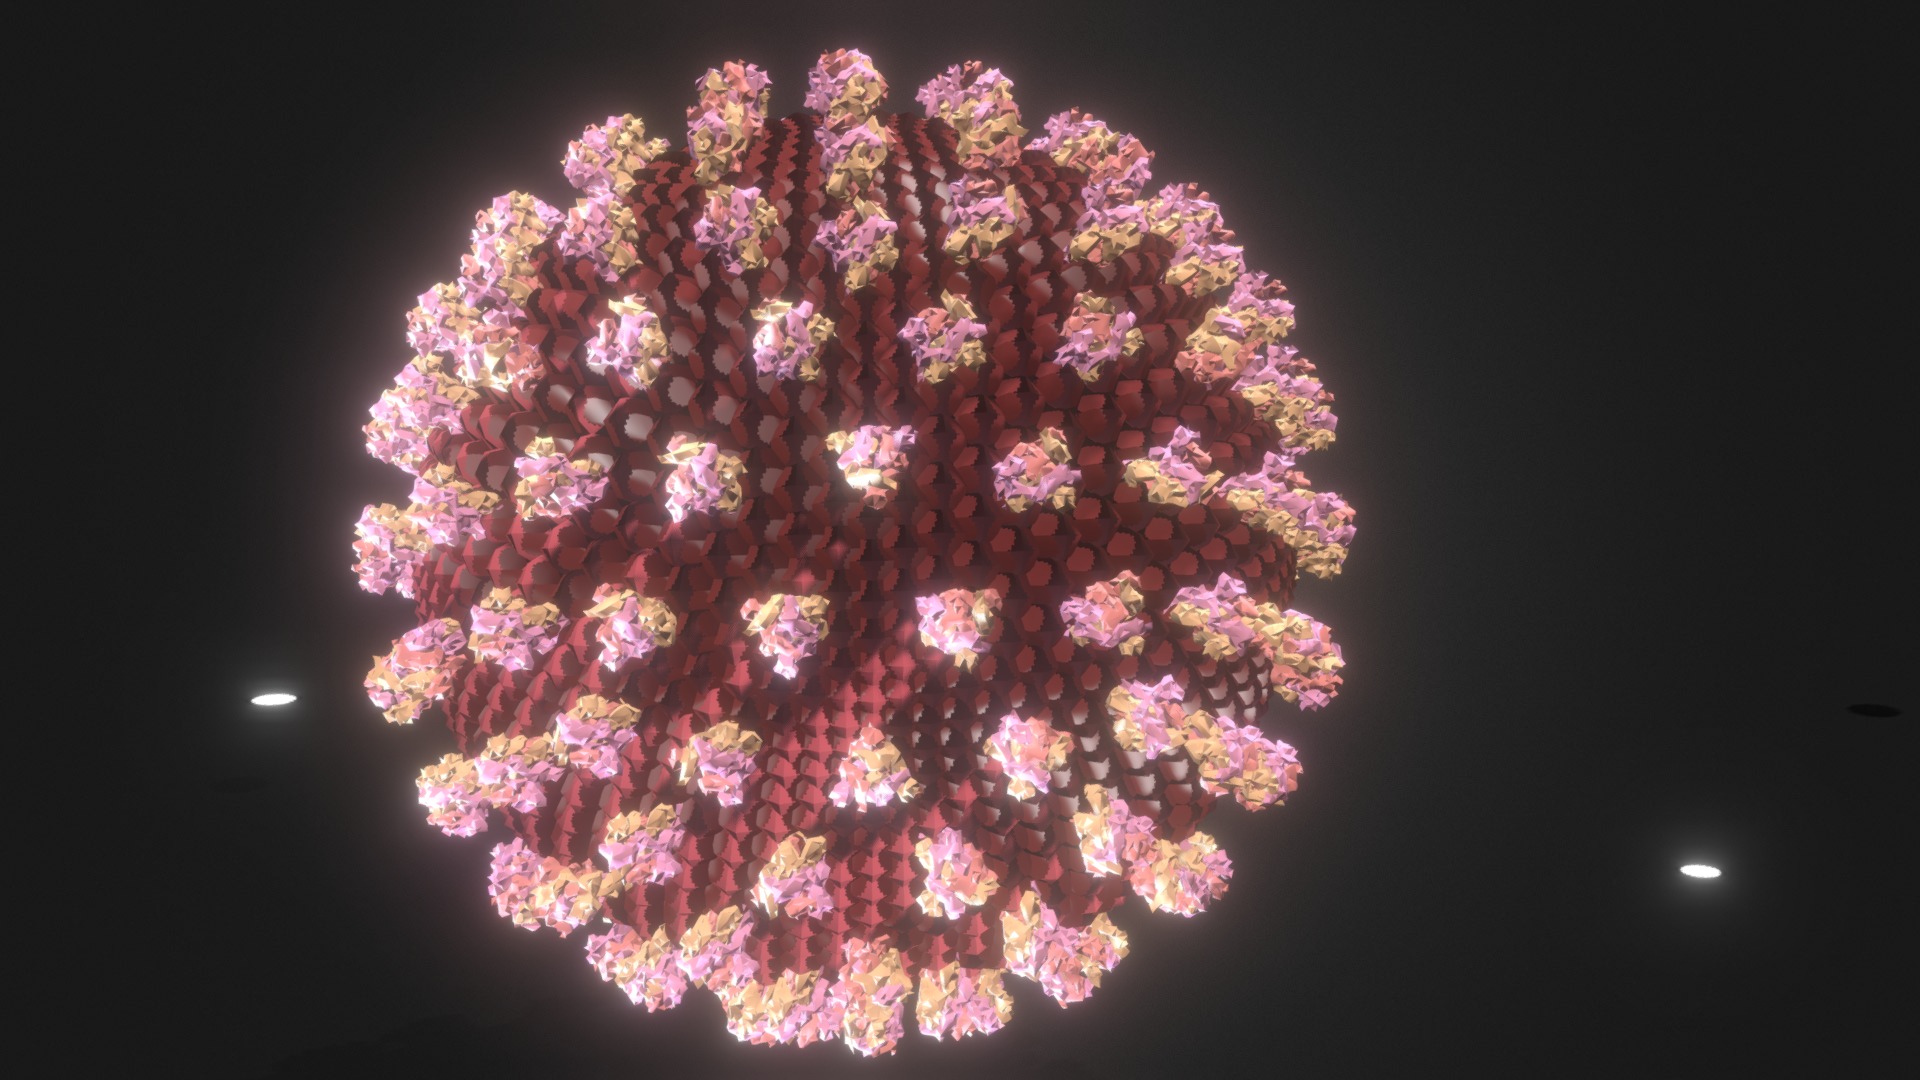 3D model Caronavirus - This is a 3D model of the Caronavirus. The 3D model is about a pink and purple flower.